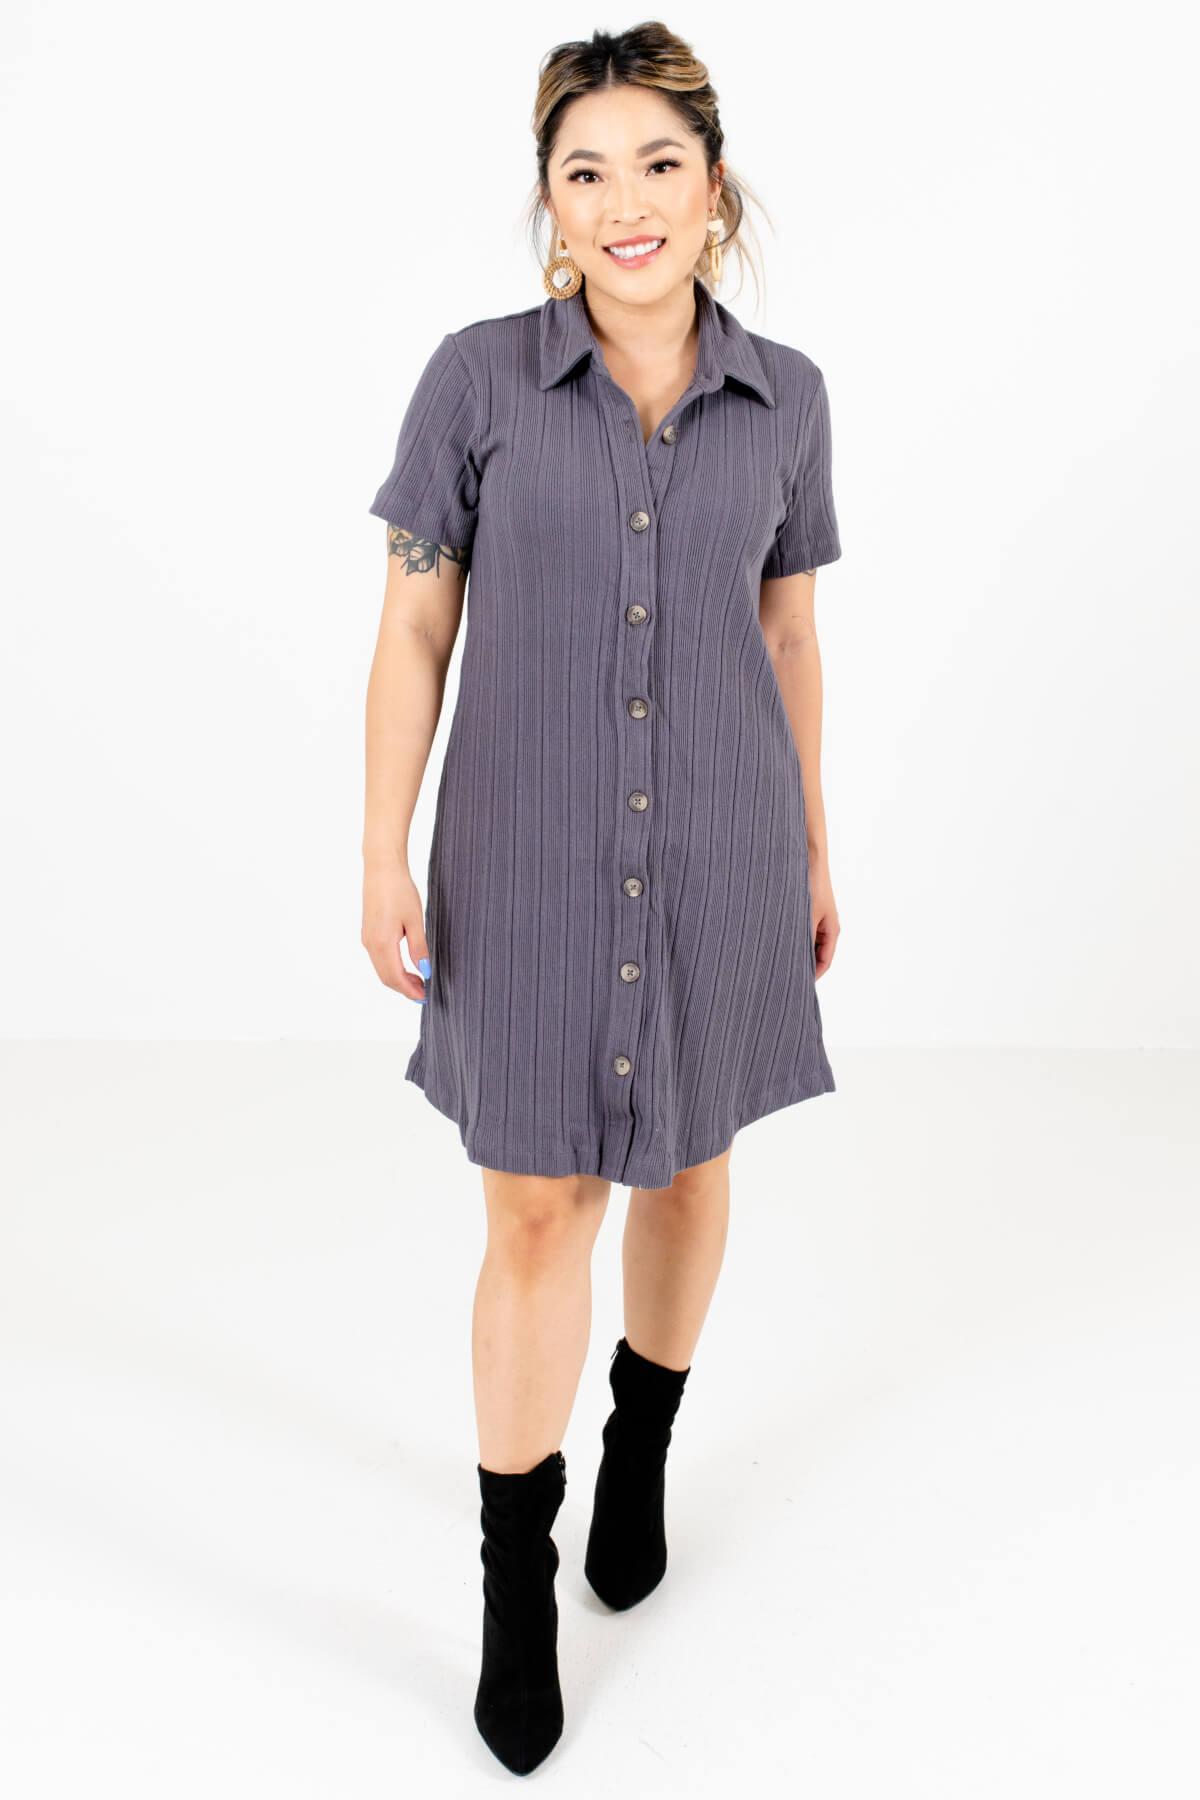 Slate Gray Date Night Boutique Mini Dresses for Women